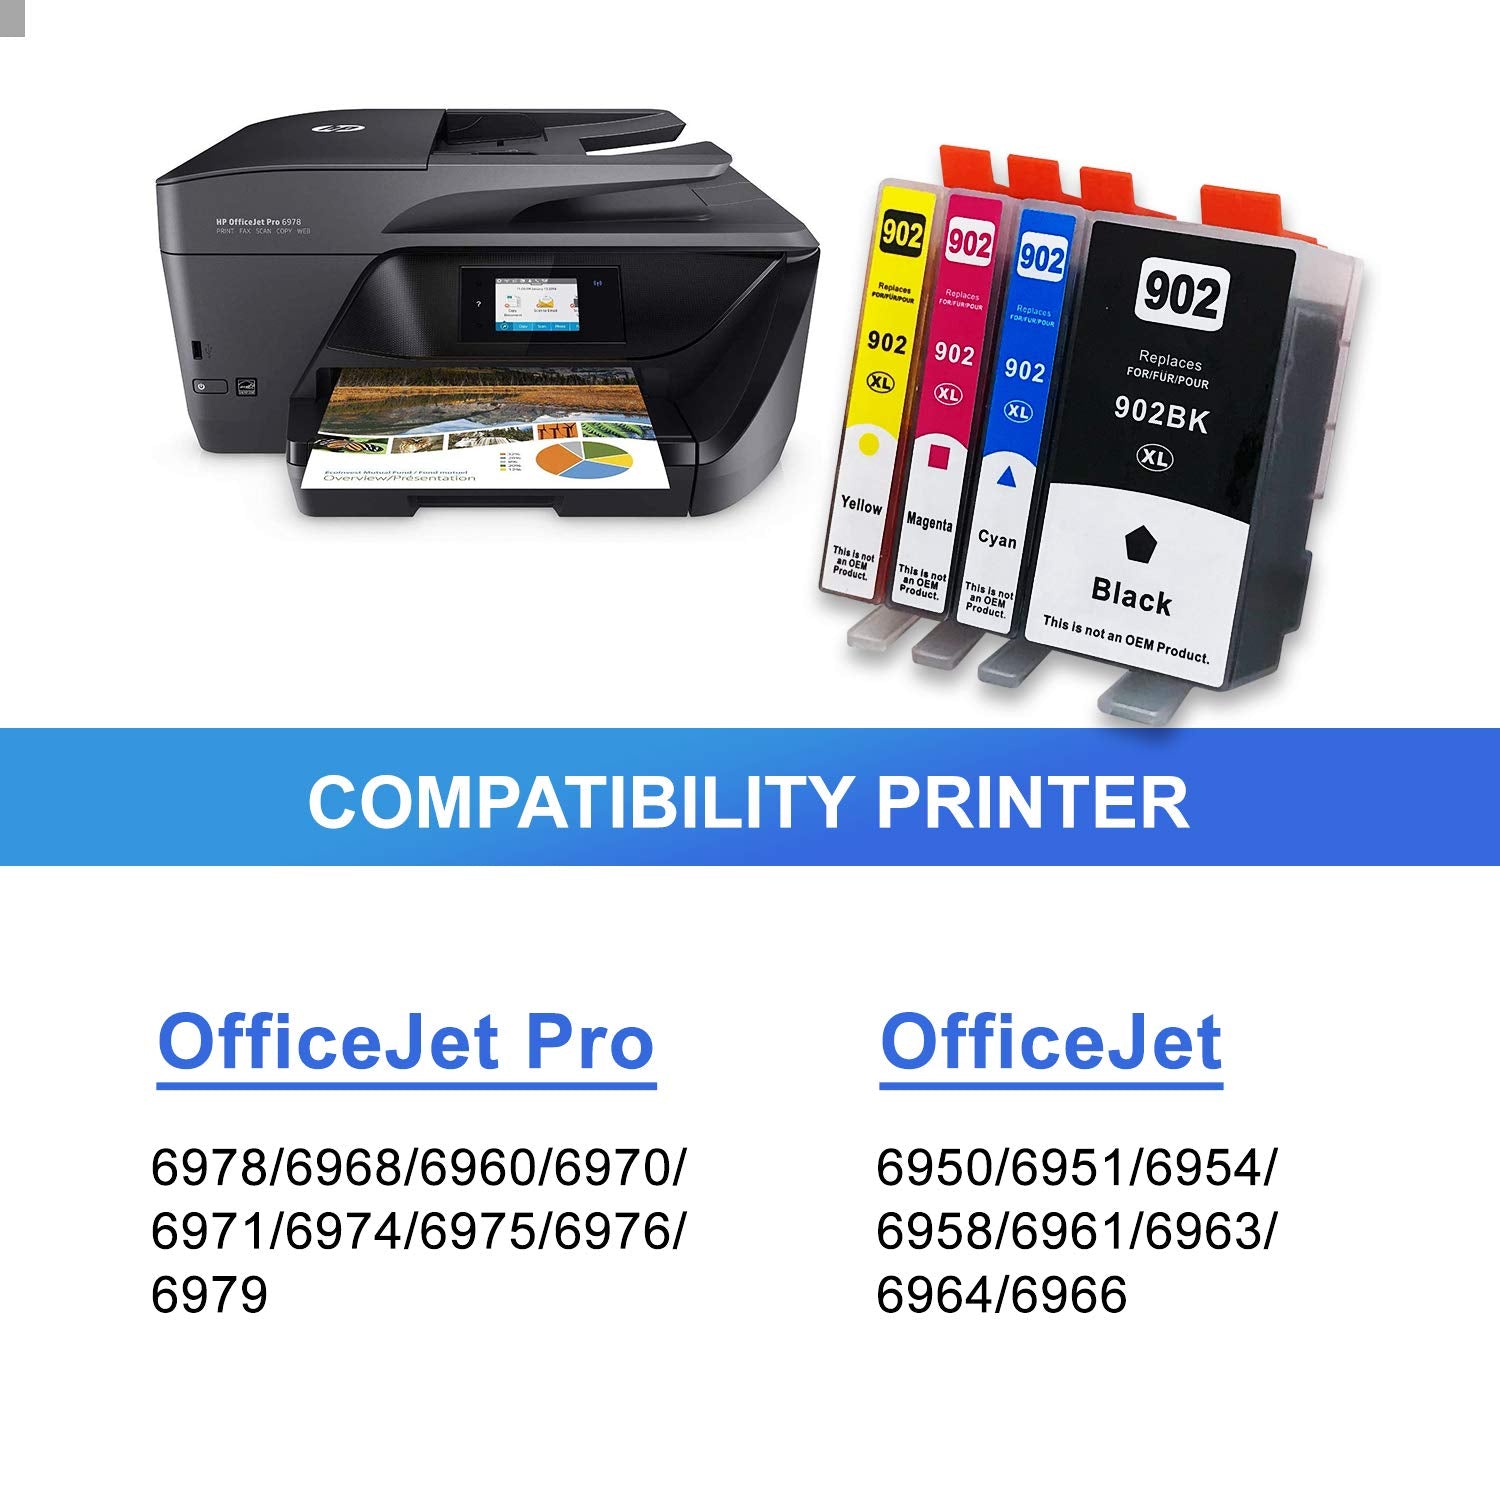 HP OfficeJet 6950 Black Ink Printing Problem & Fixes 